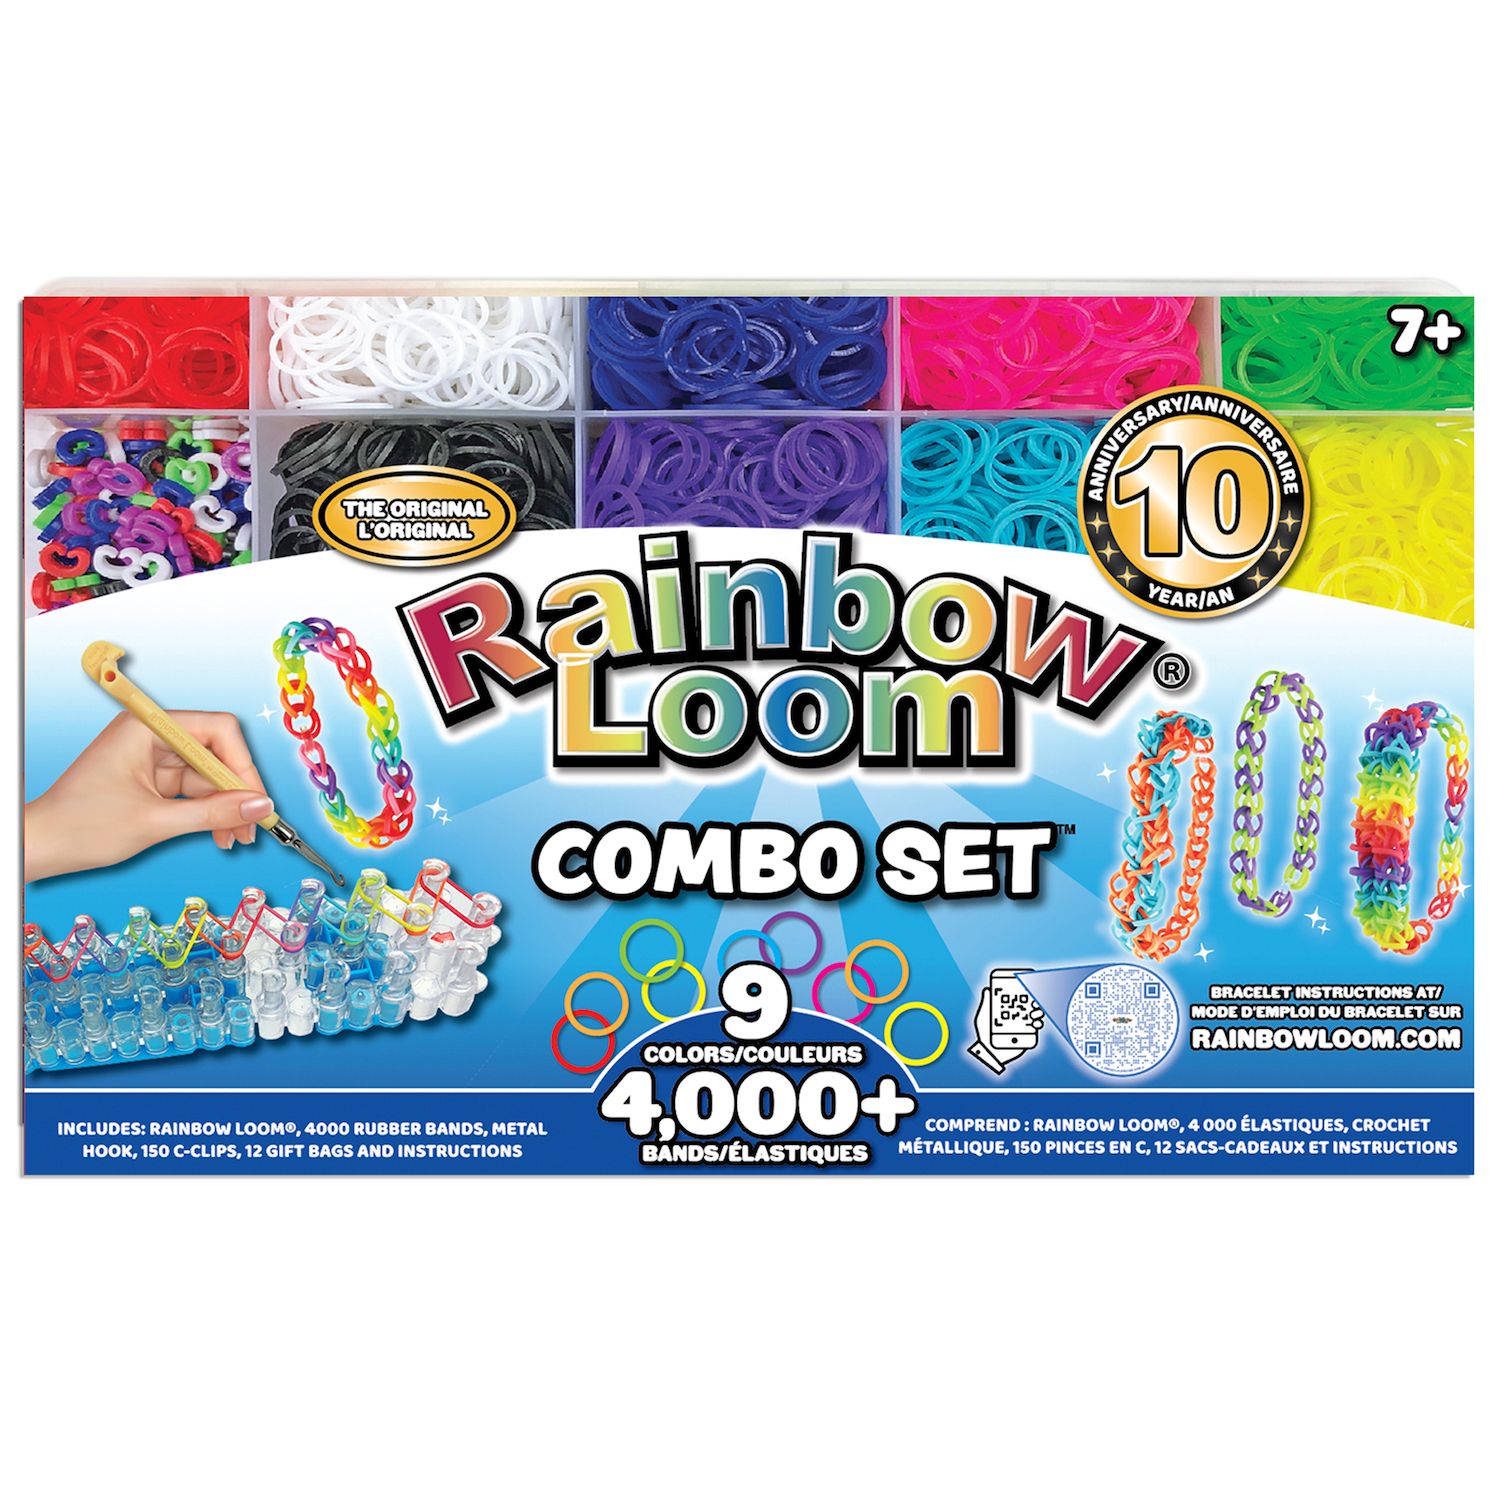 Rainbow Loom Loomi-Pals Combo Bracelet Kit with Charms - Creative